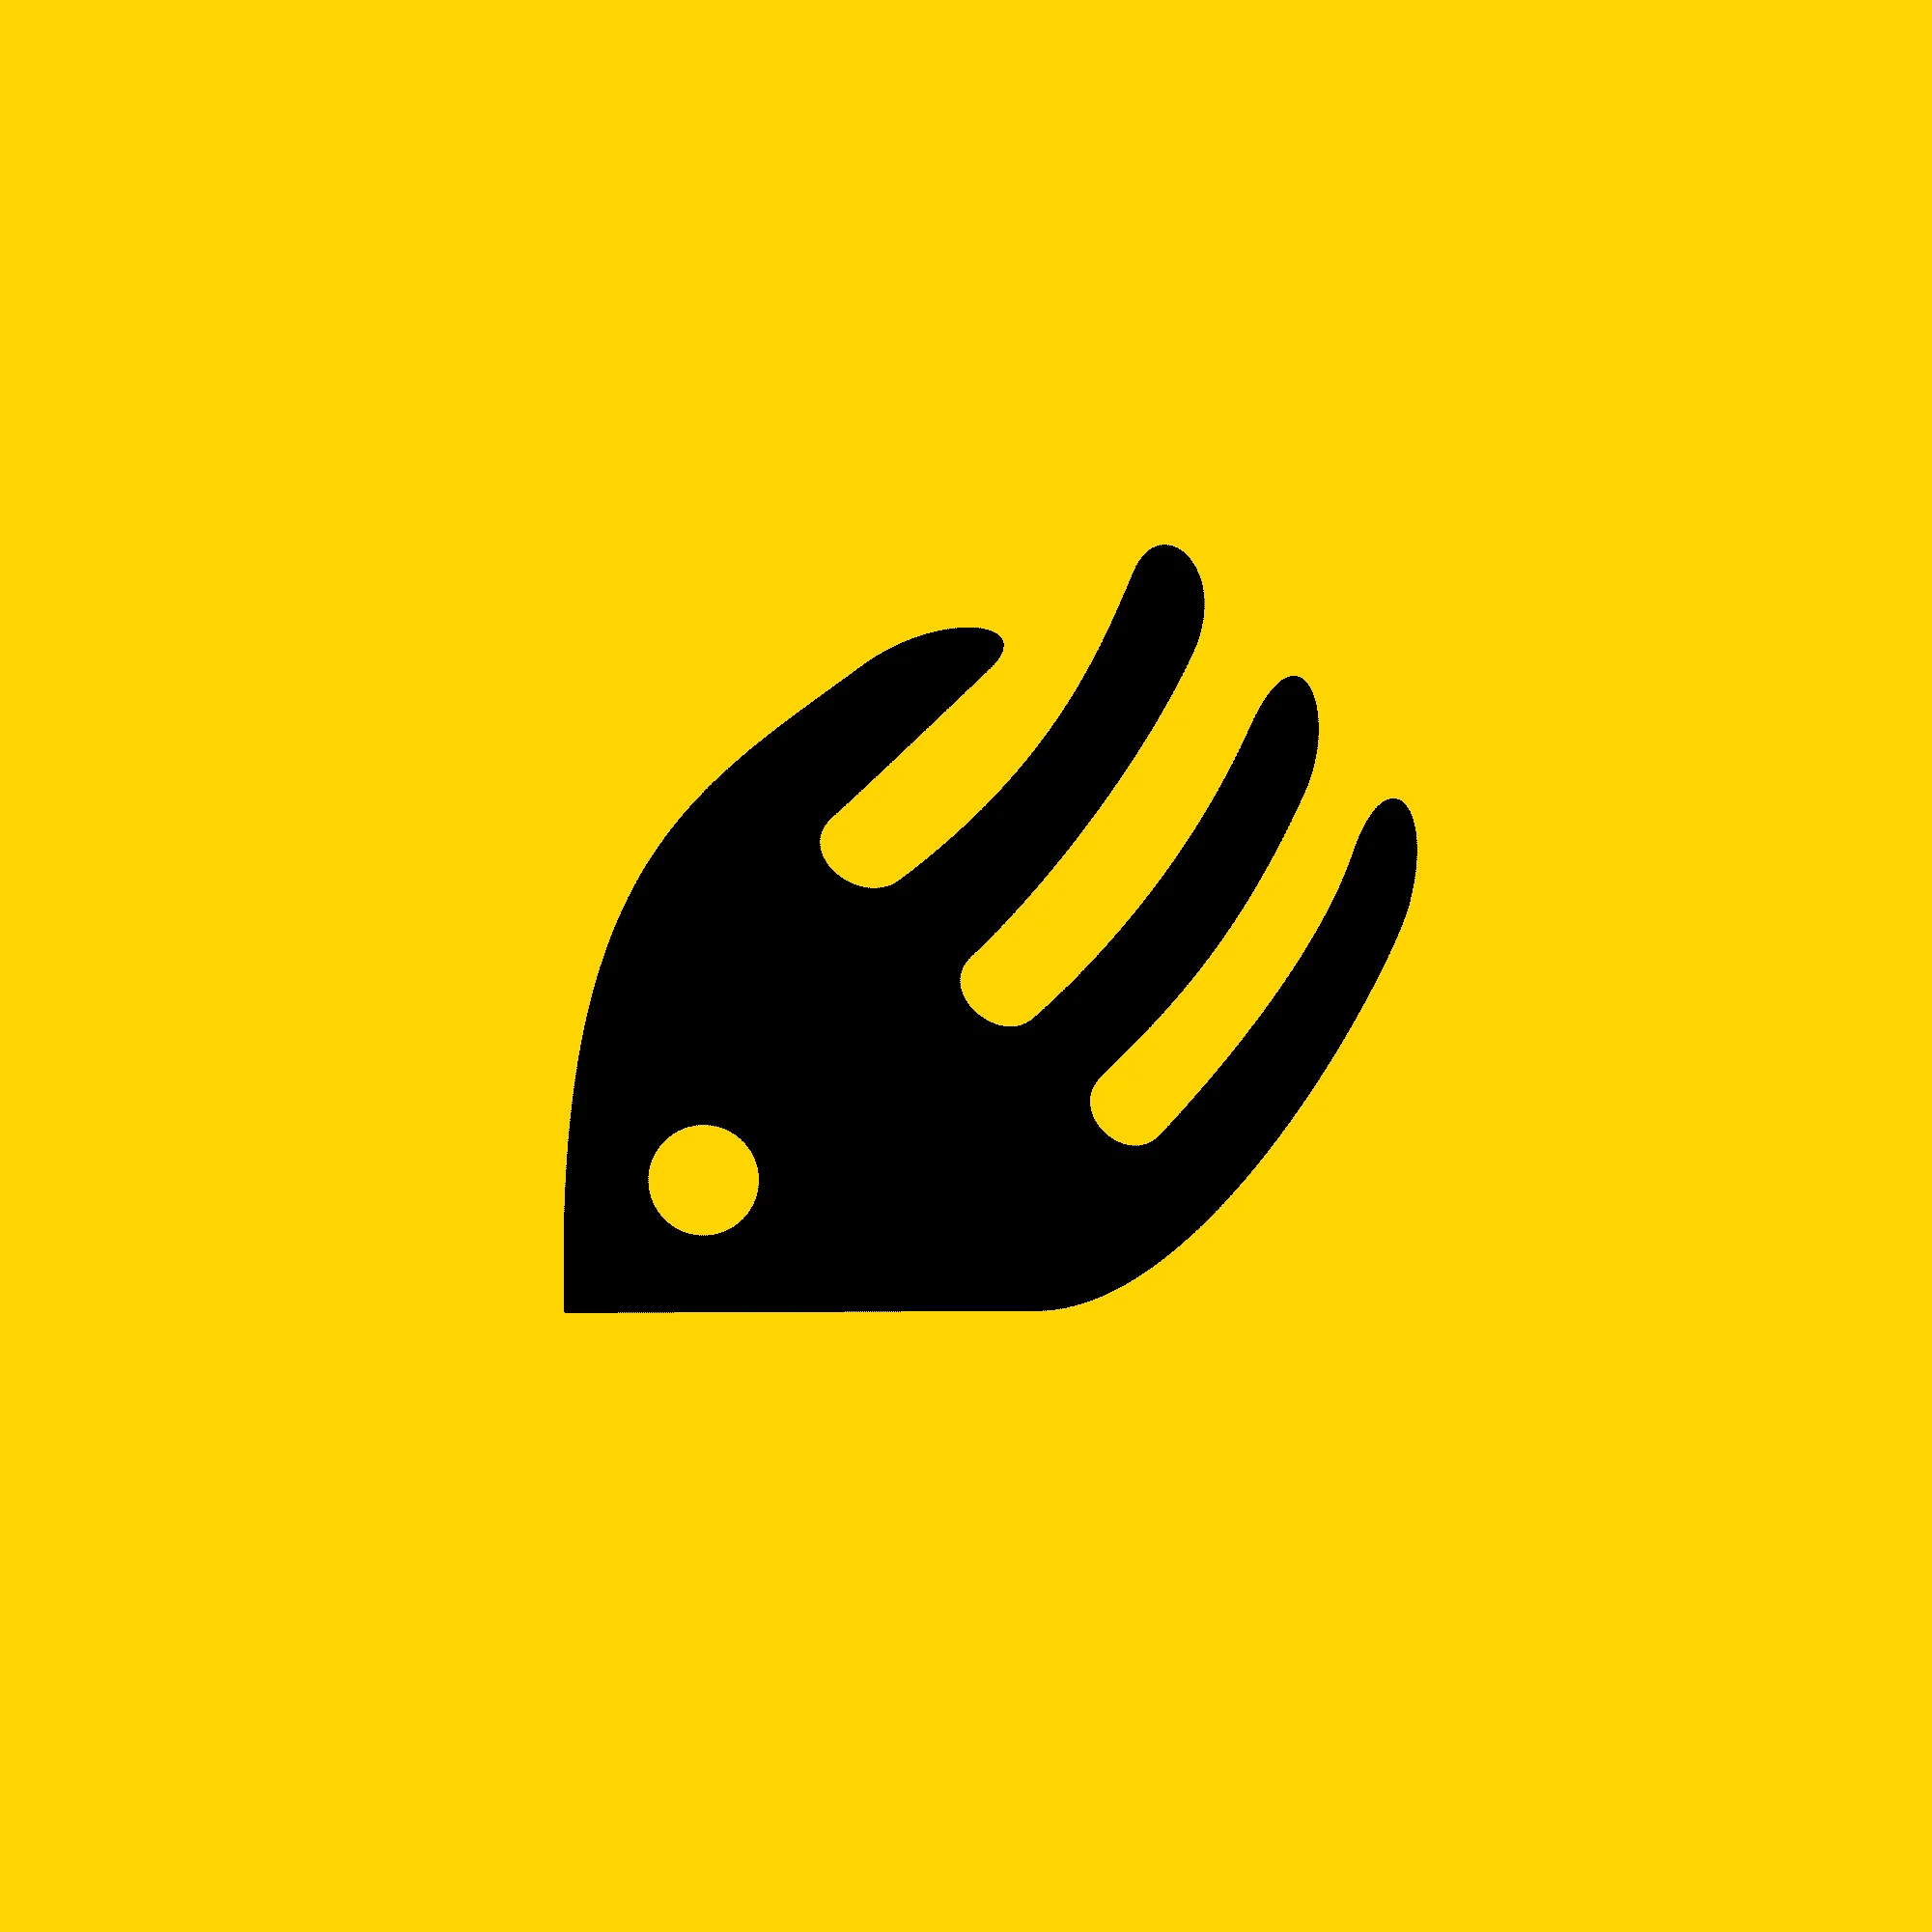 Branding Logo Design Fish fork shaped, black and yellow